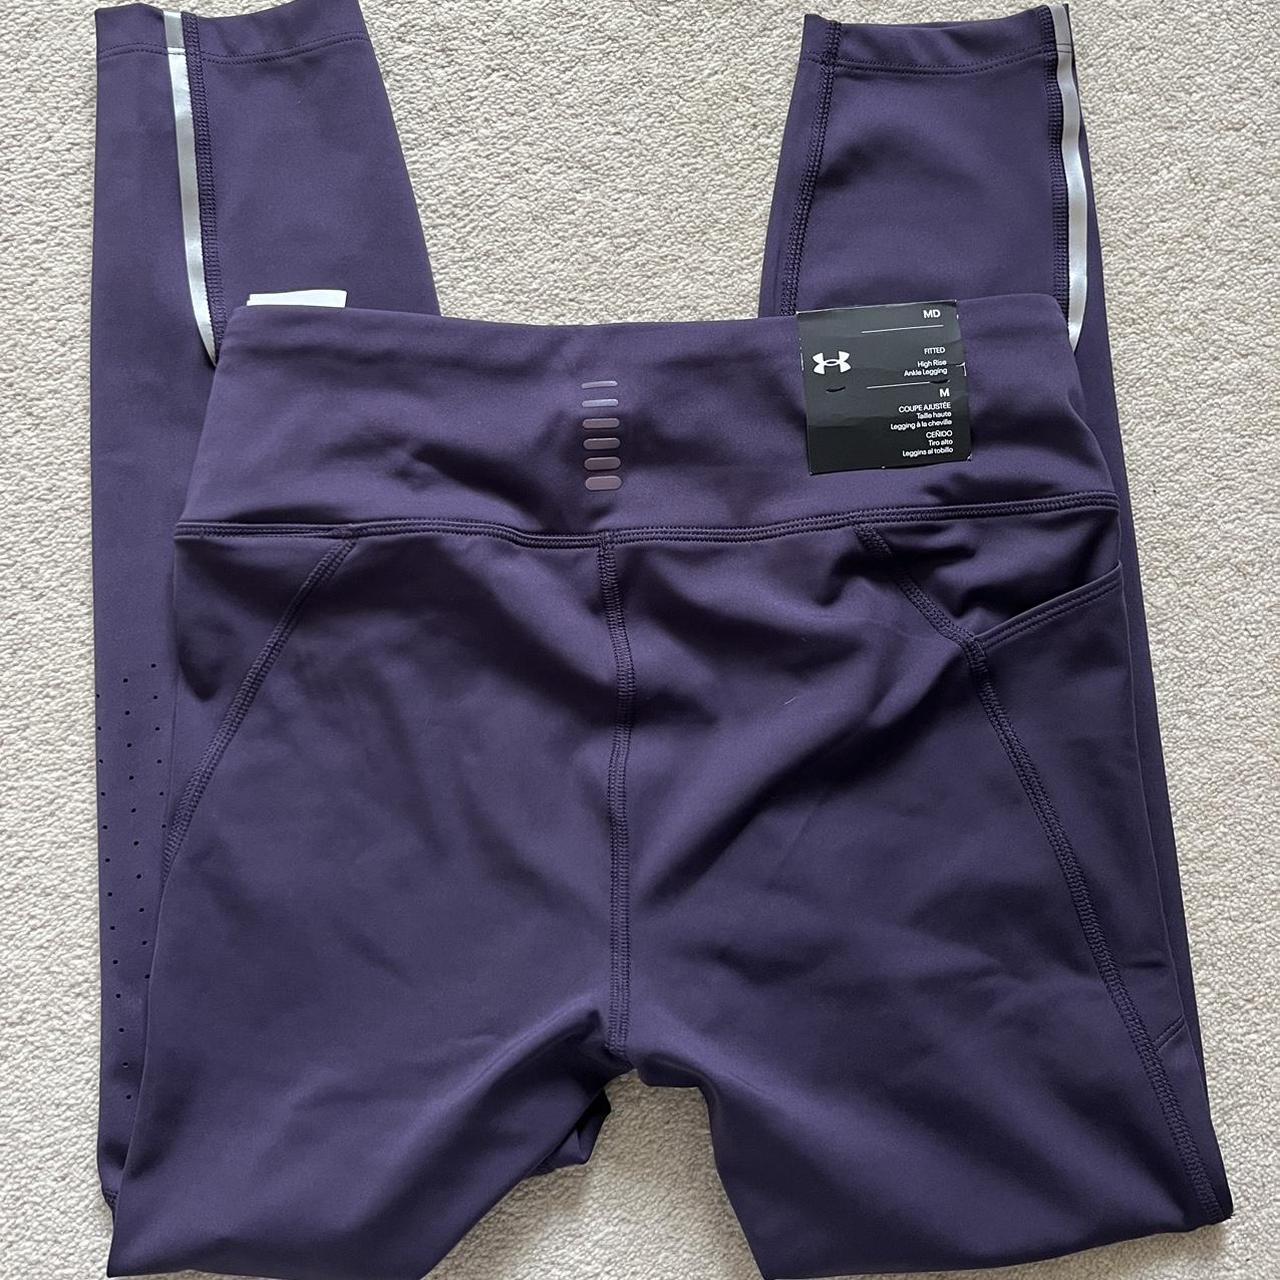 Under armour purple and blue leggings Og price 65 - Depop